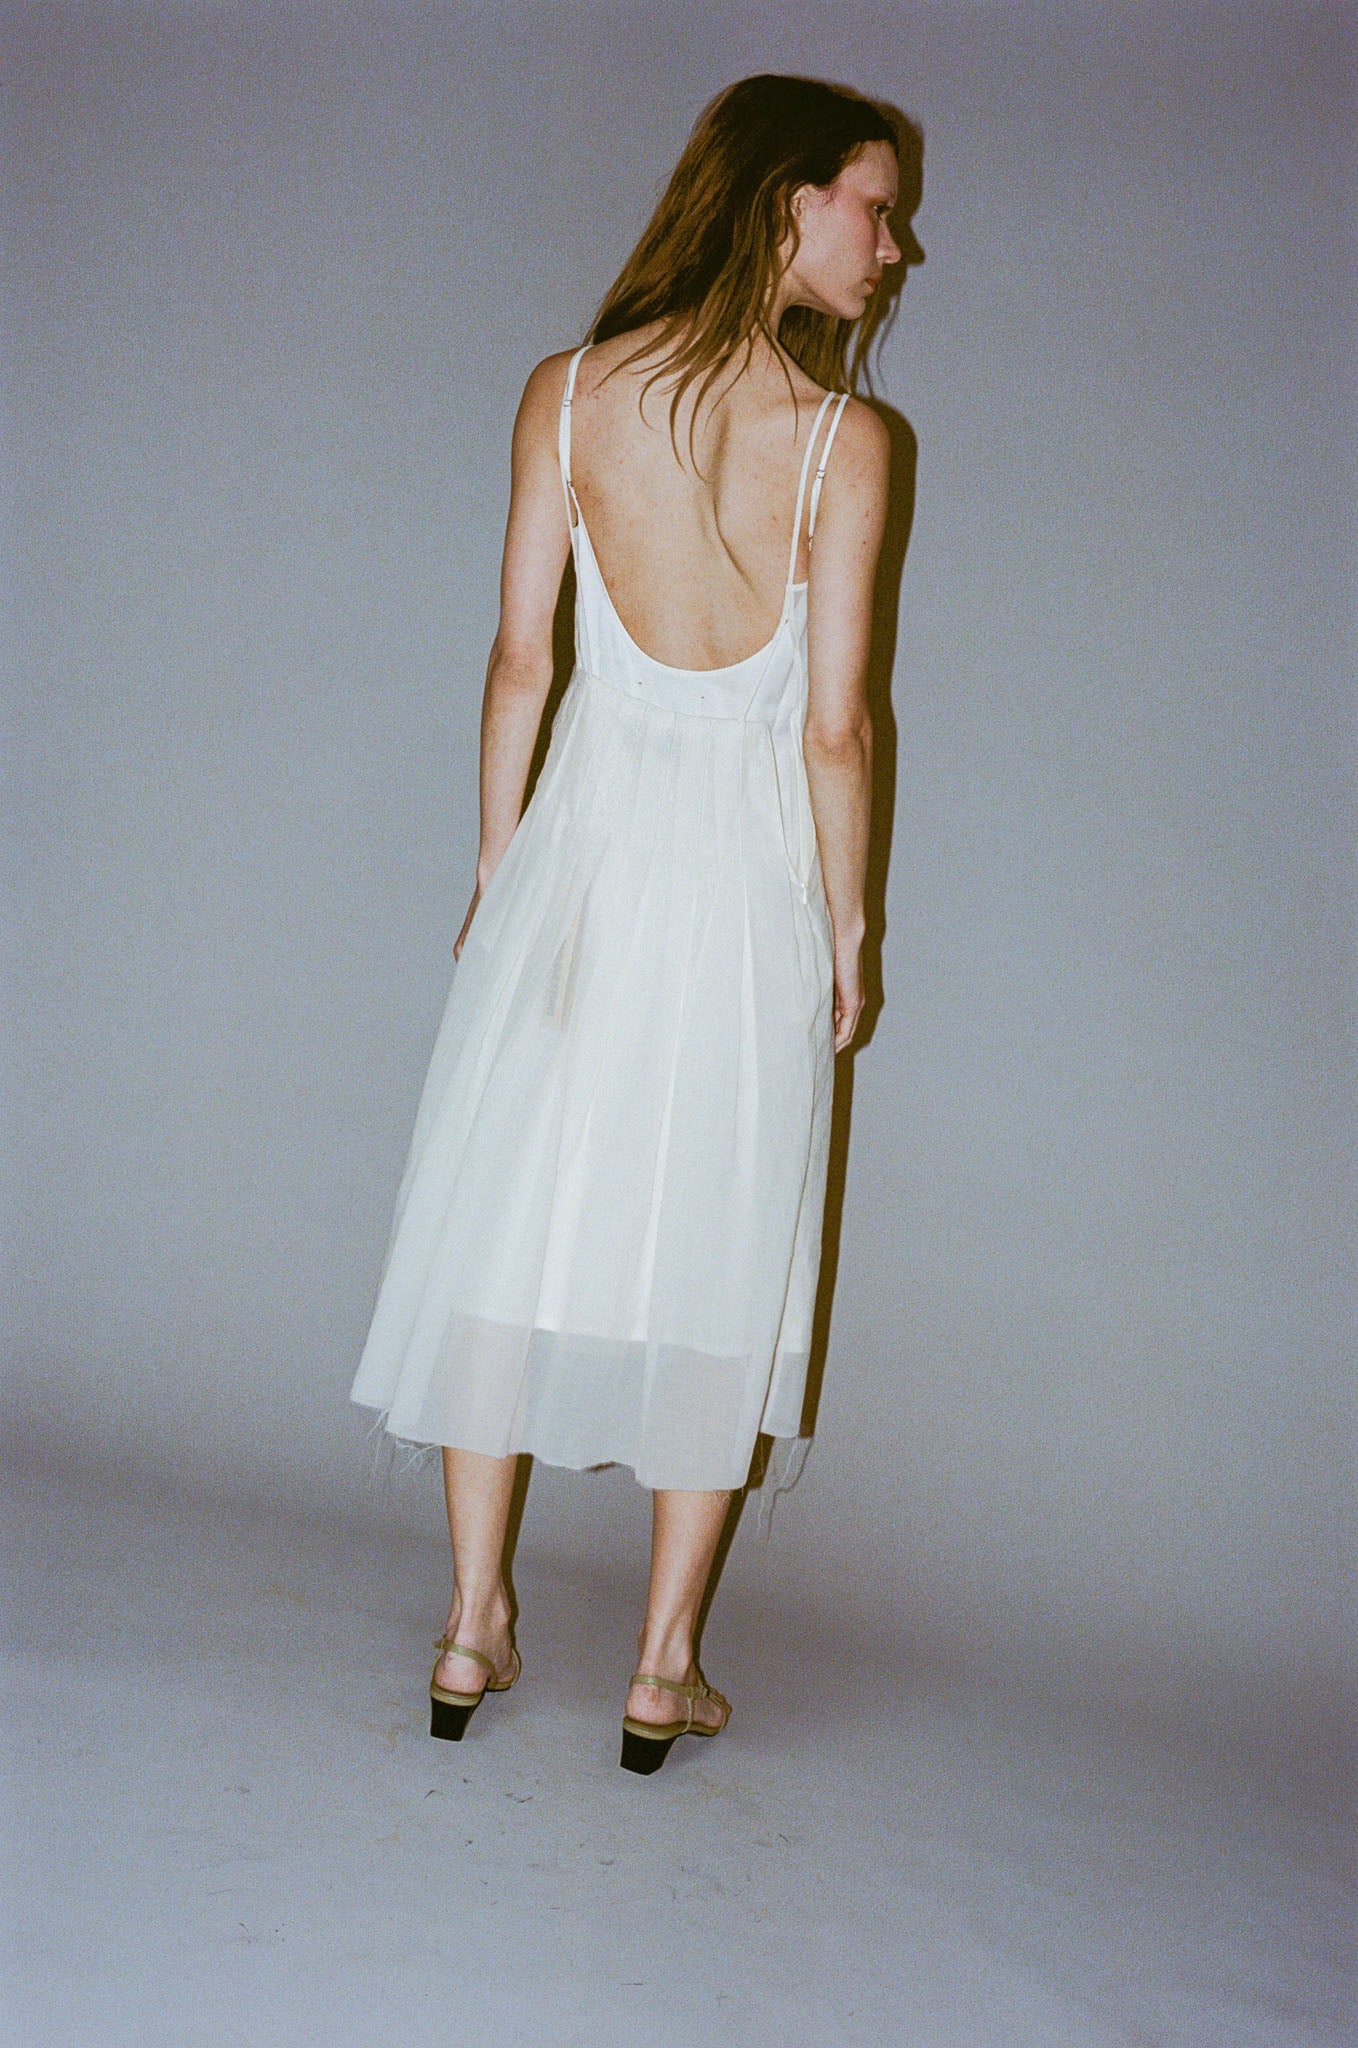 UNISECON Brylin Dress in White